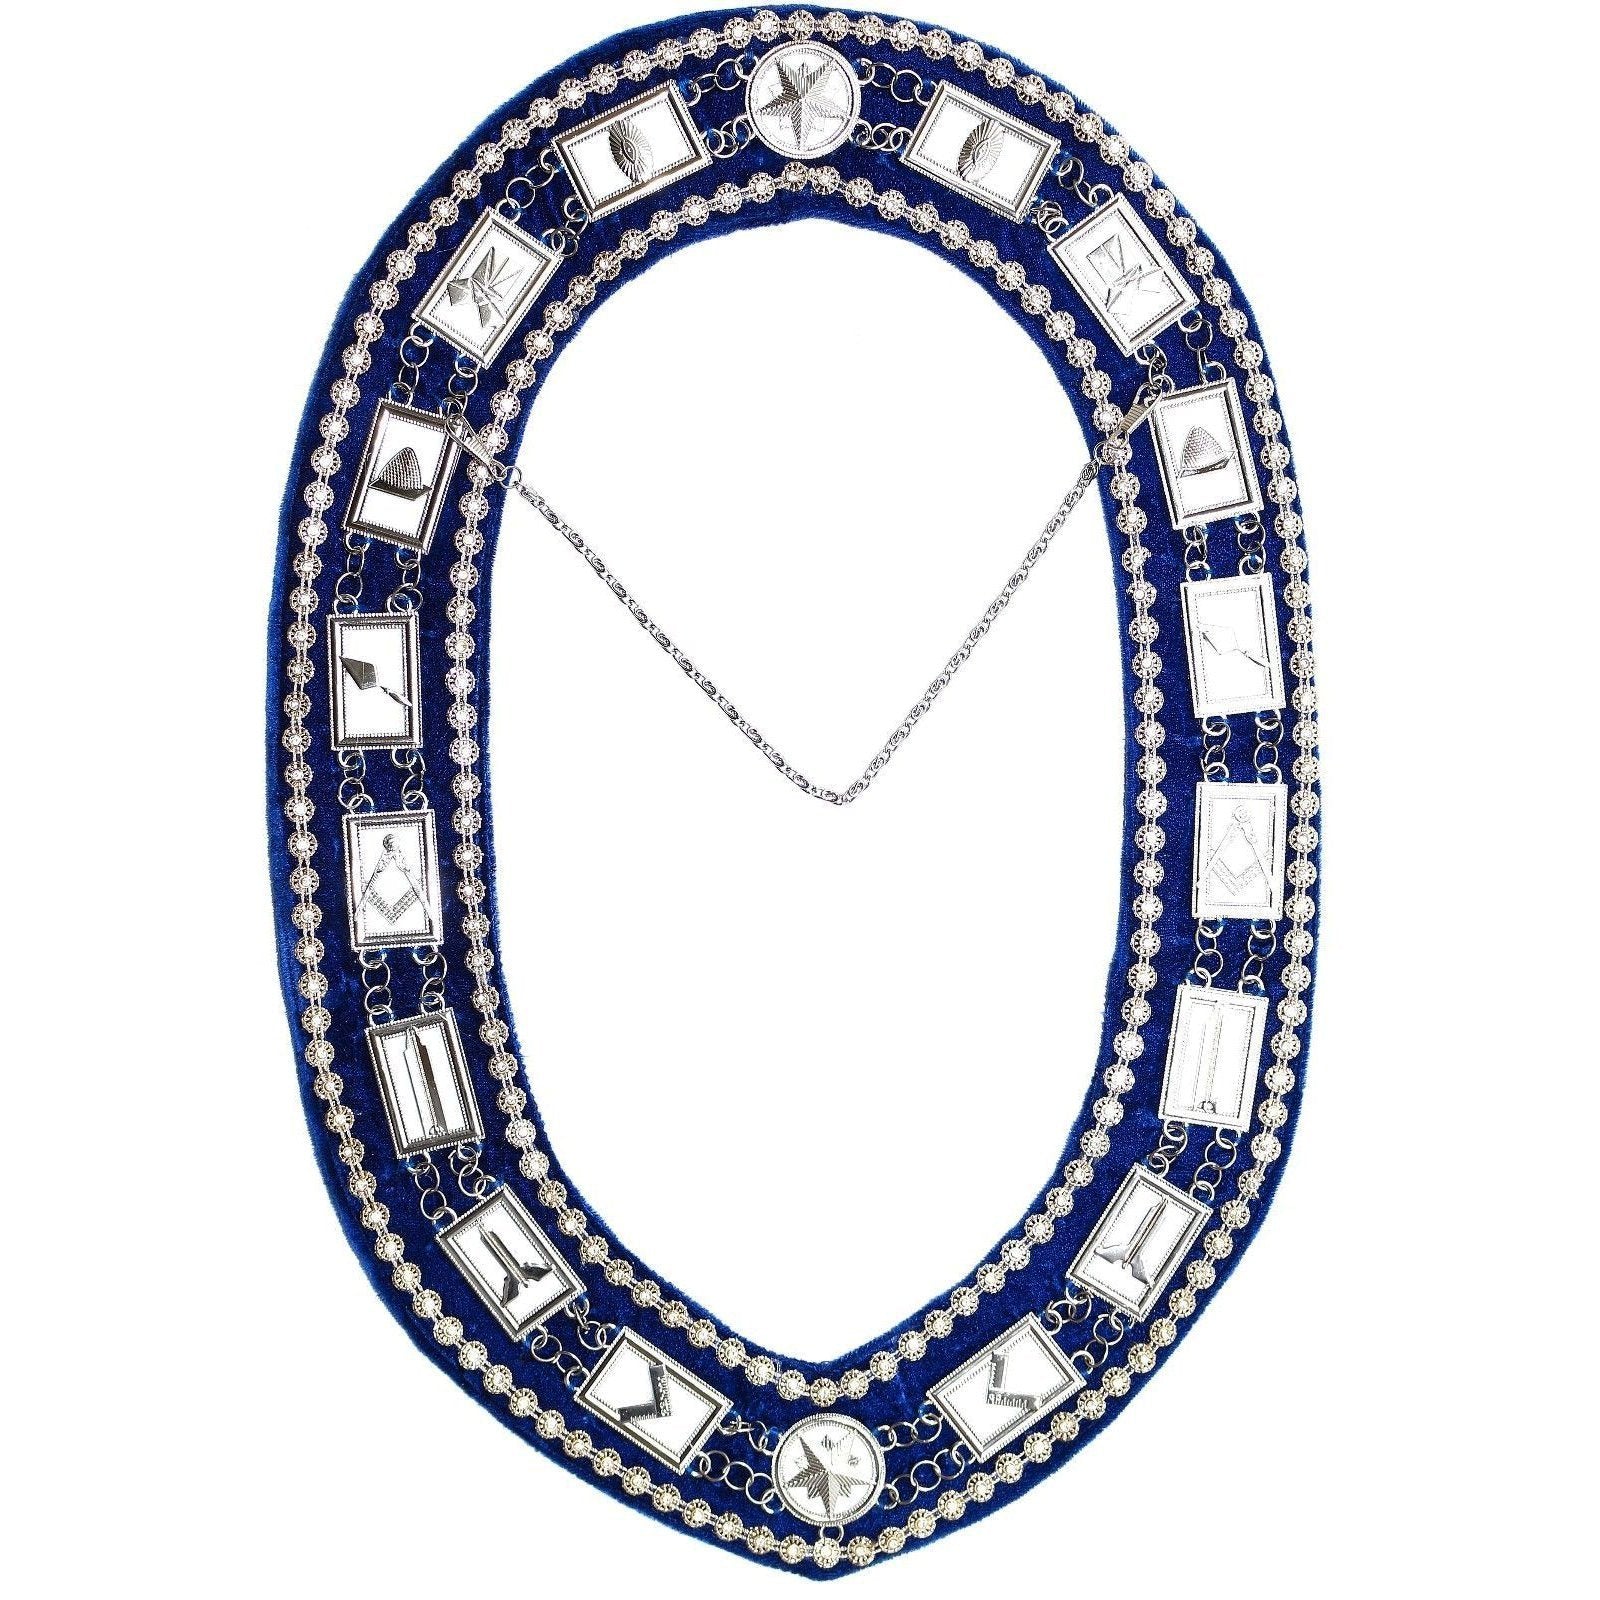 Blue Lodge Chain Collar - Silver Plated with Rhinestones on Blue Velvet - Bricks Masons